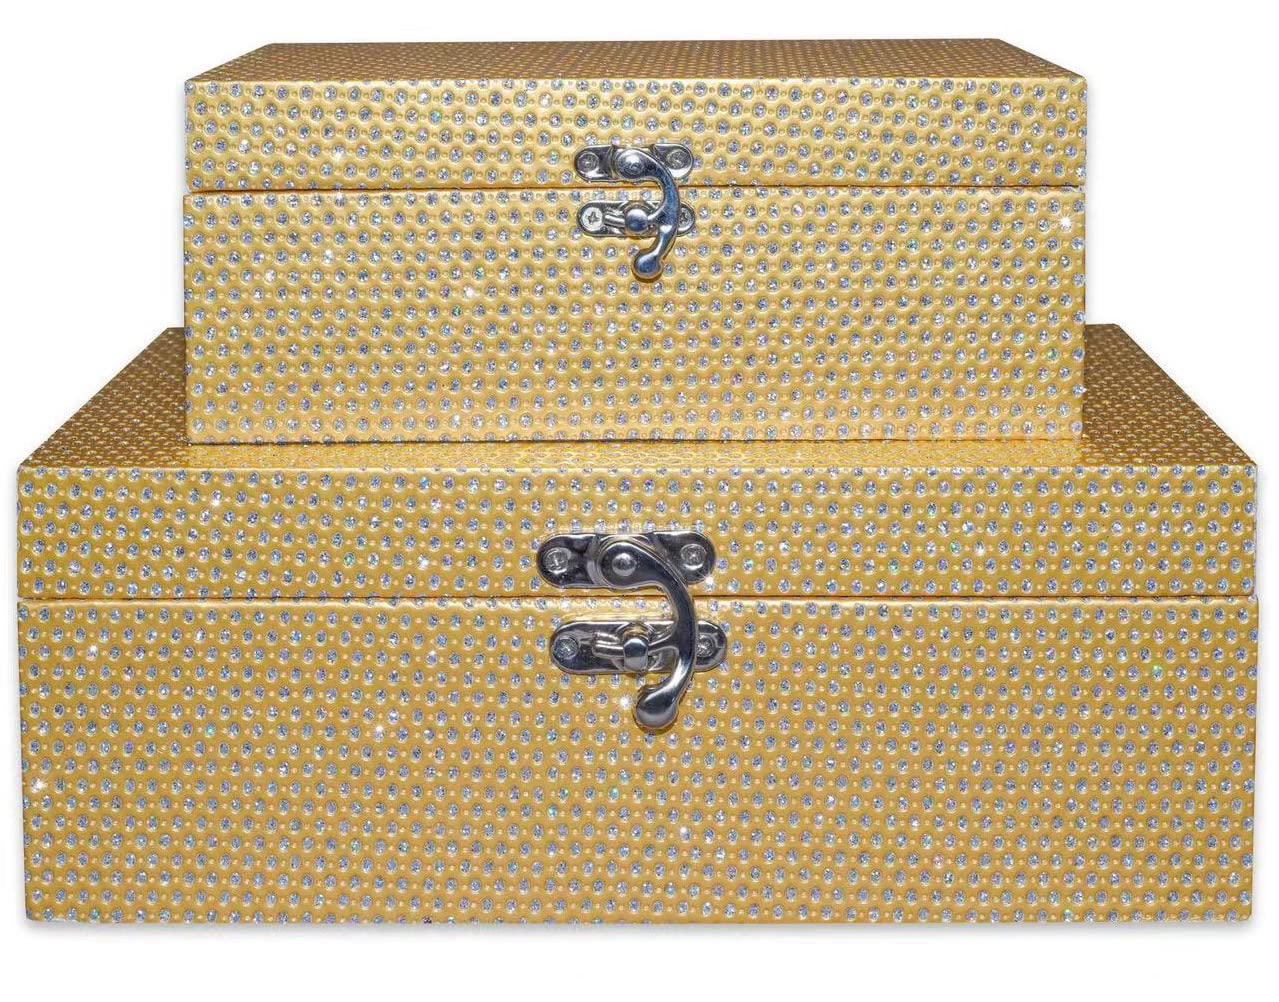 Mua MODE HOME Gold Glitter Leather Decorative Storage Boxes ...